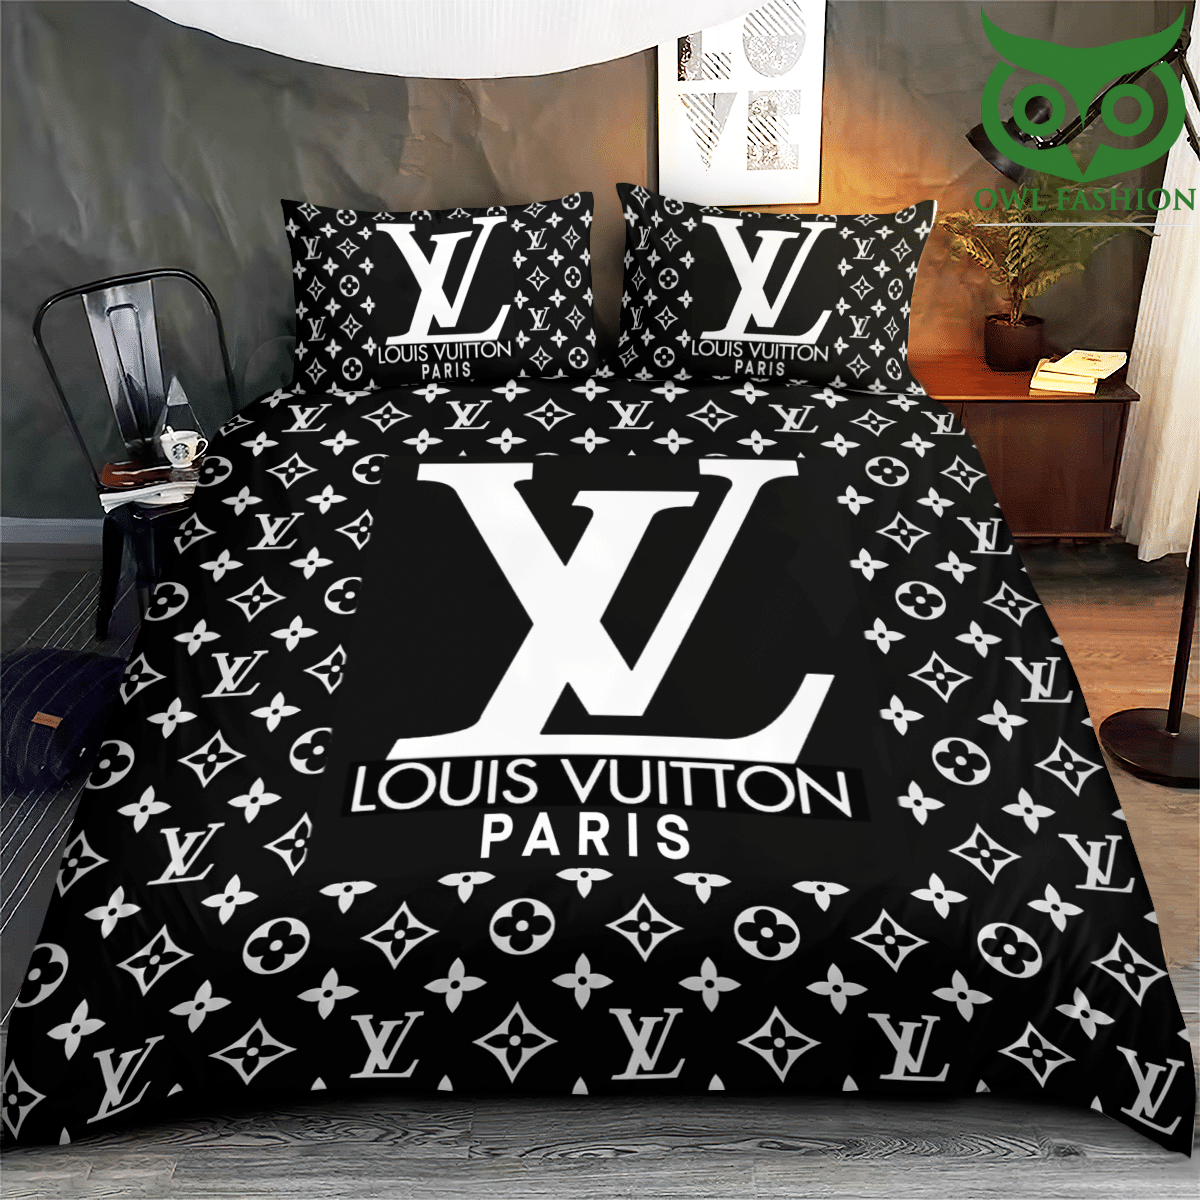 LUXURY Louis Vuitton basic logo black bedding set